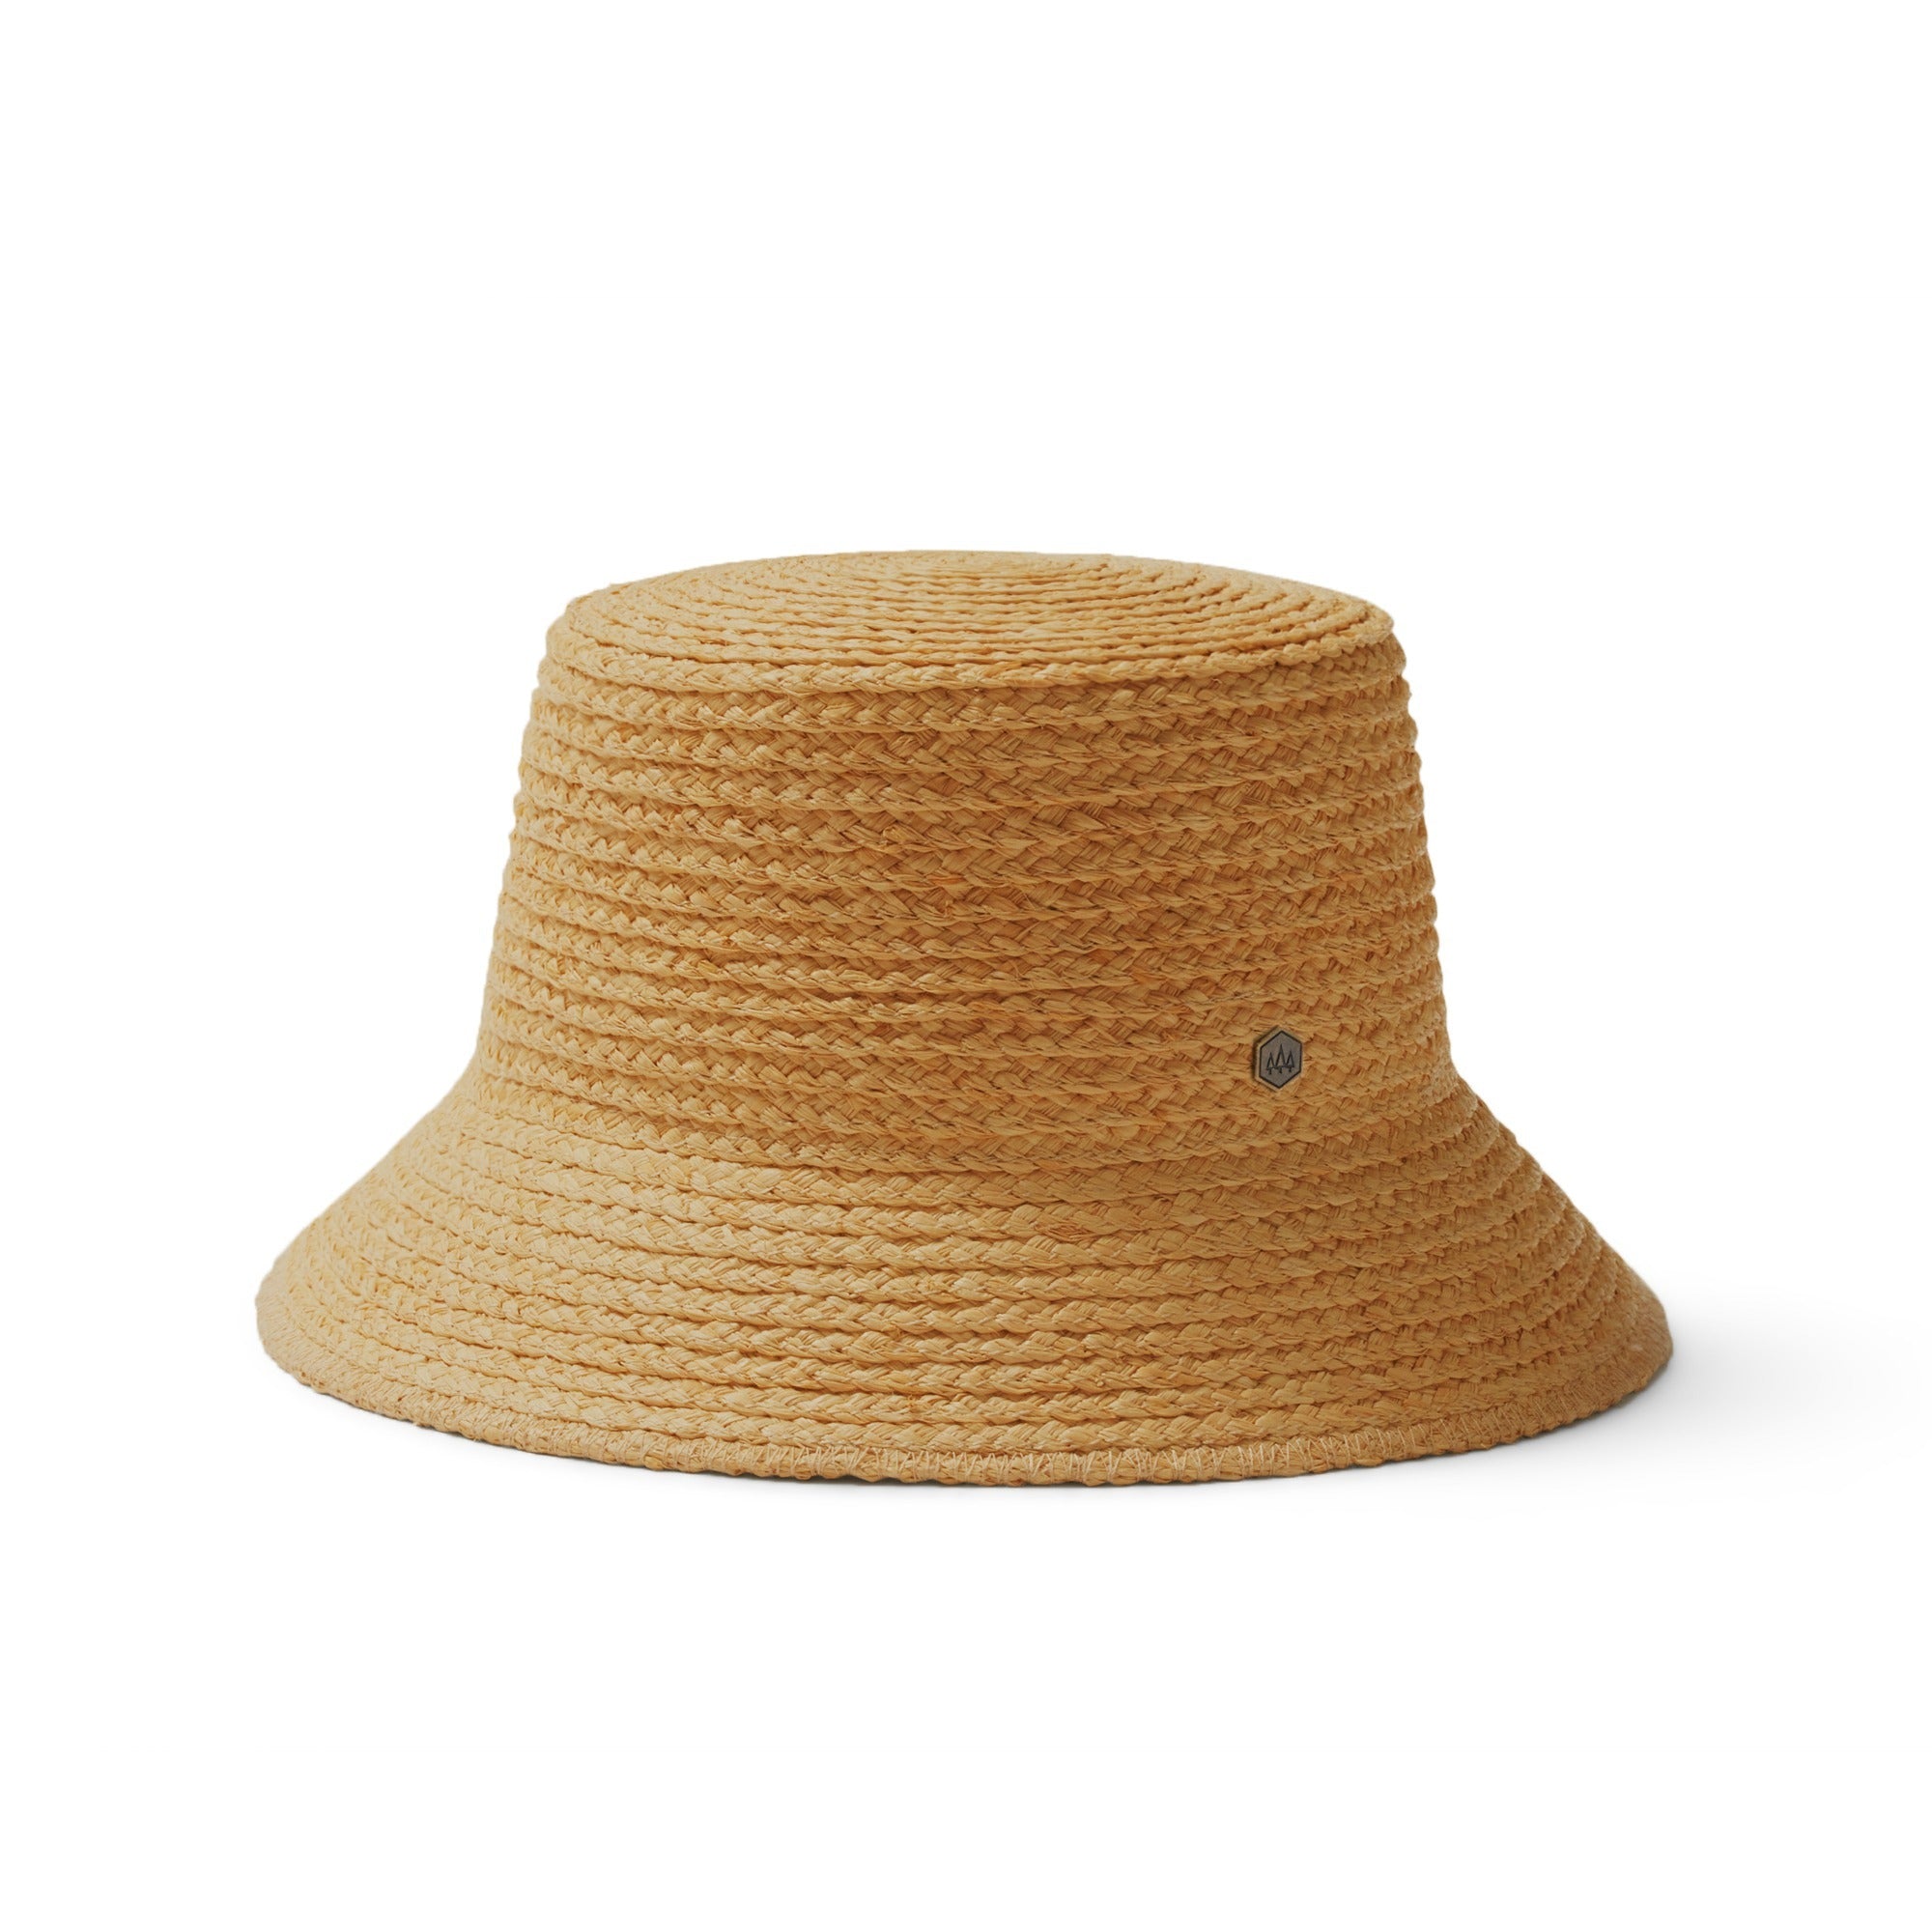 Hemlock Hat Co. Haven Bucket Hat - Tan - Small